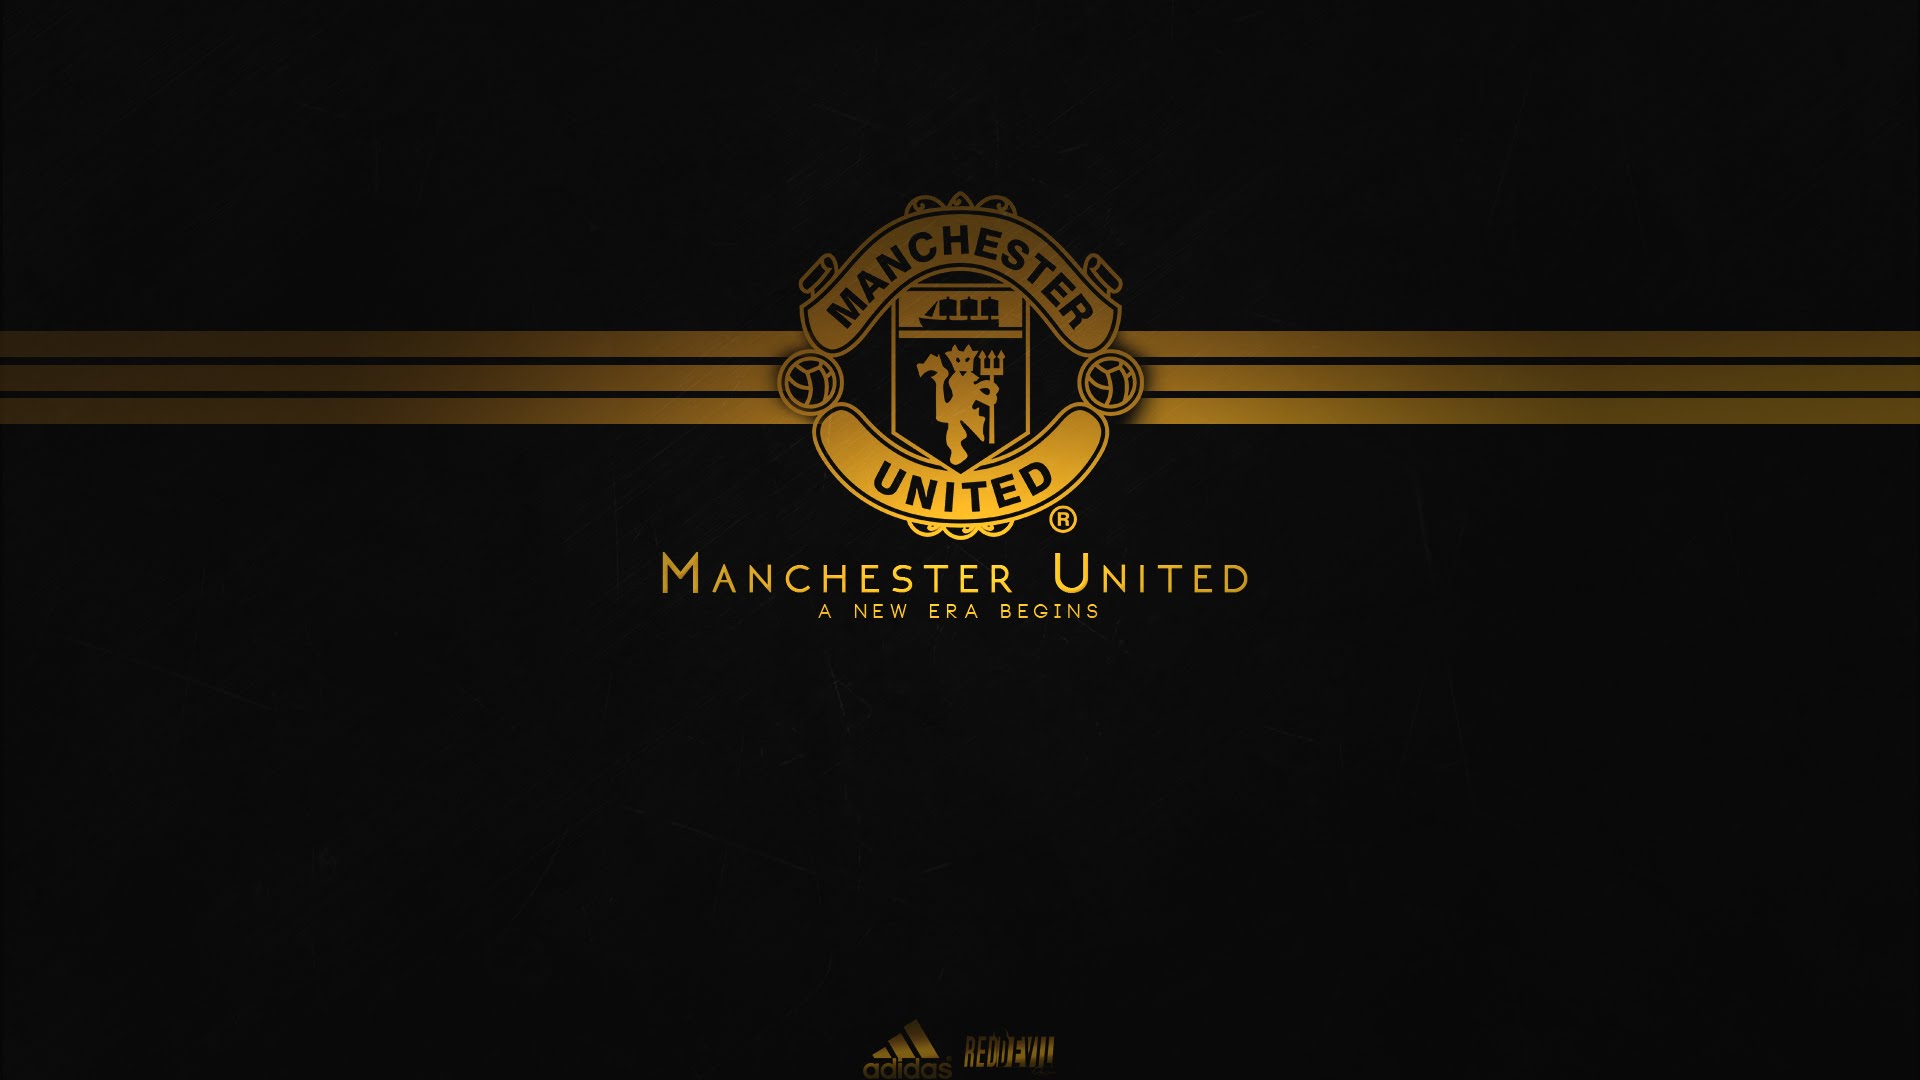 High Resolution Wallpaper Hd High Resolution Manchester United Logo 2020